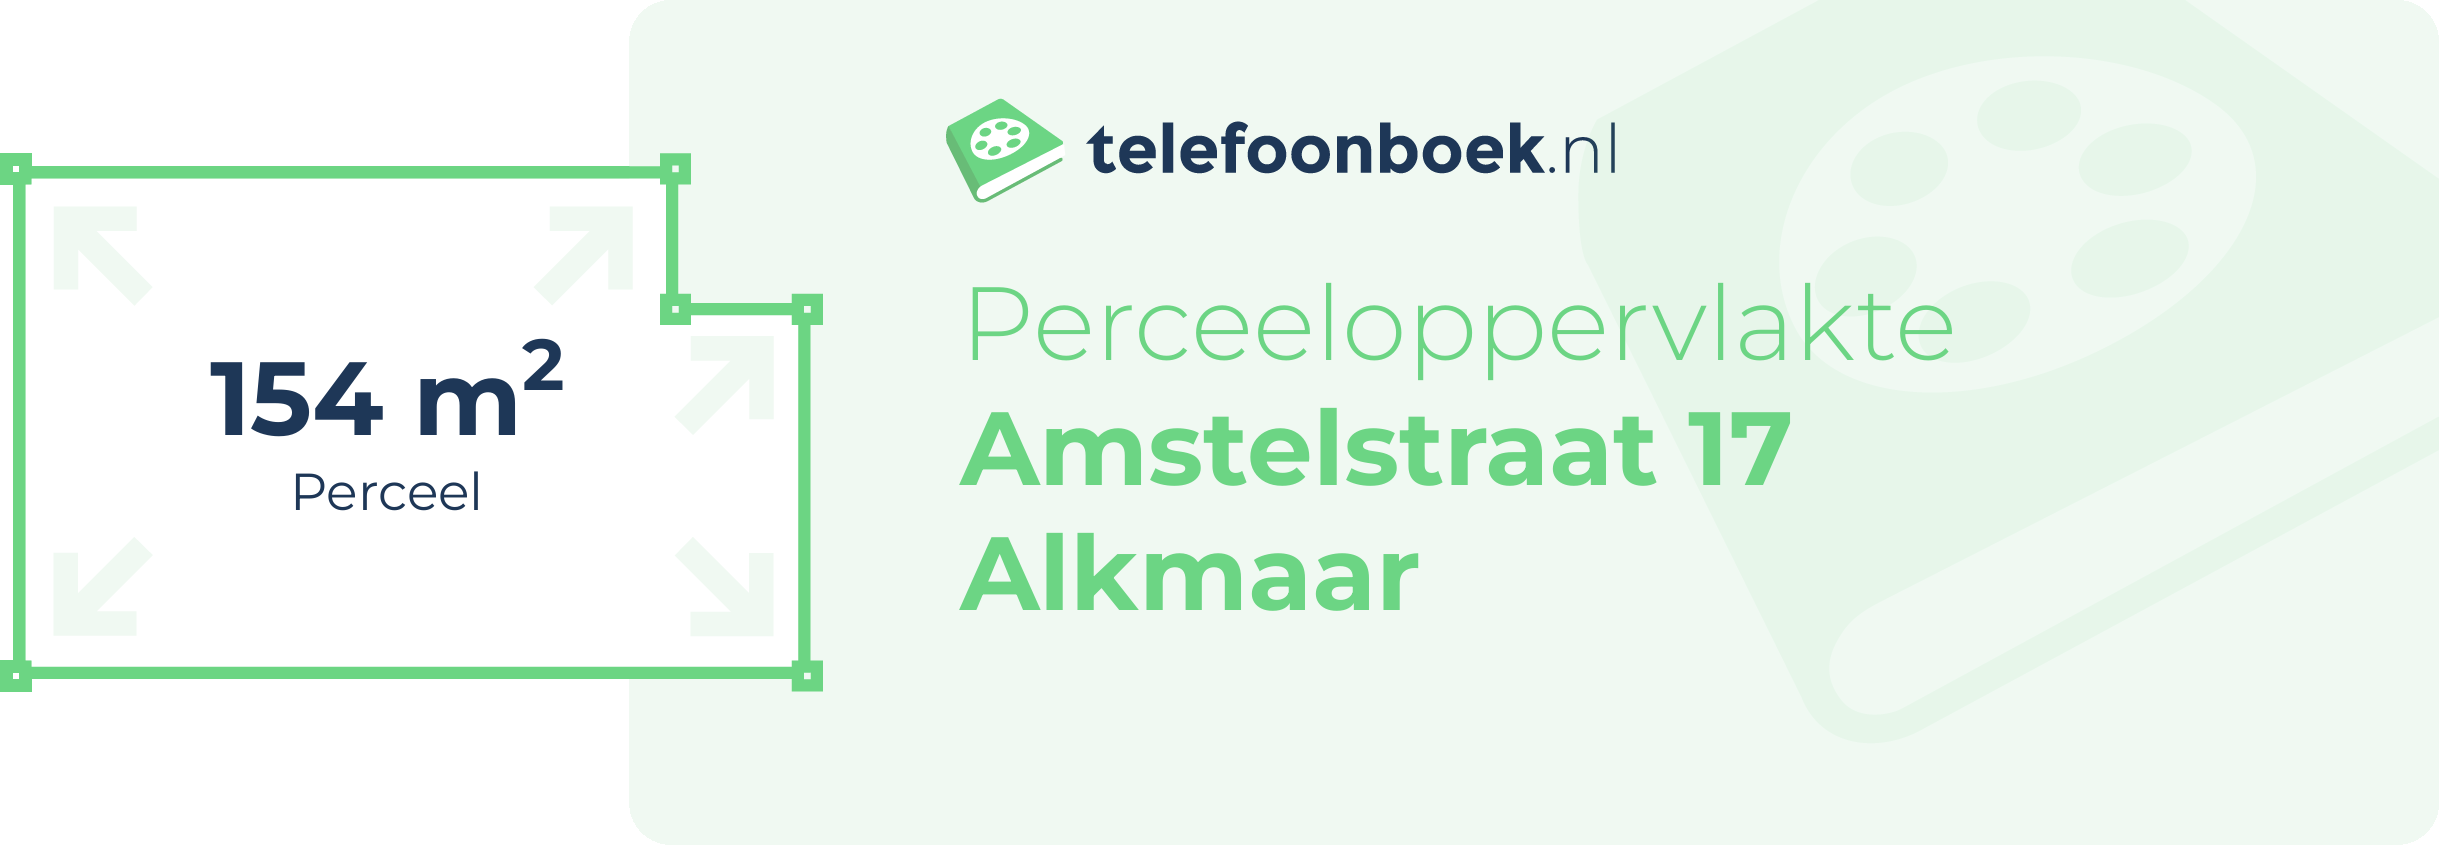 Perceeloppervlakte Amstelstraat 17 Alkmaar